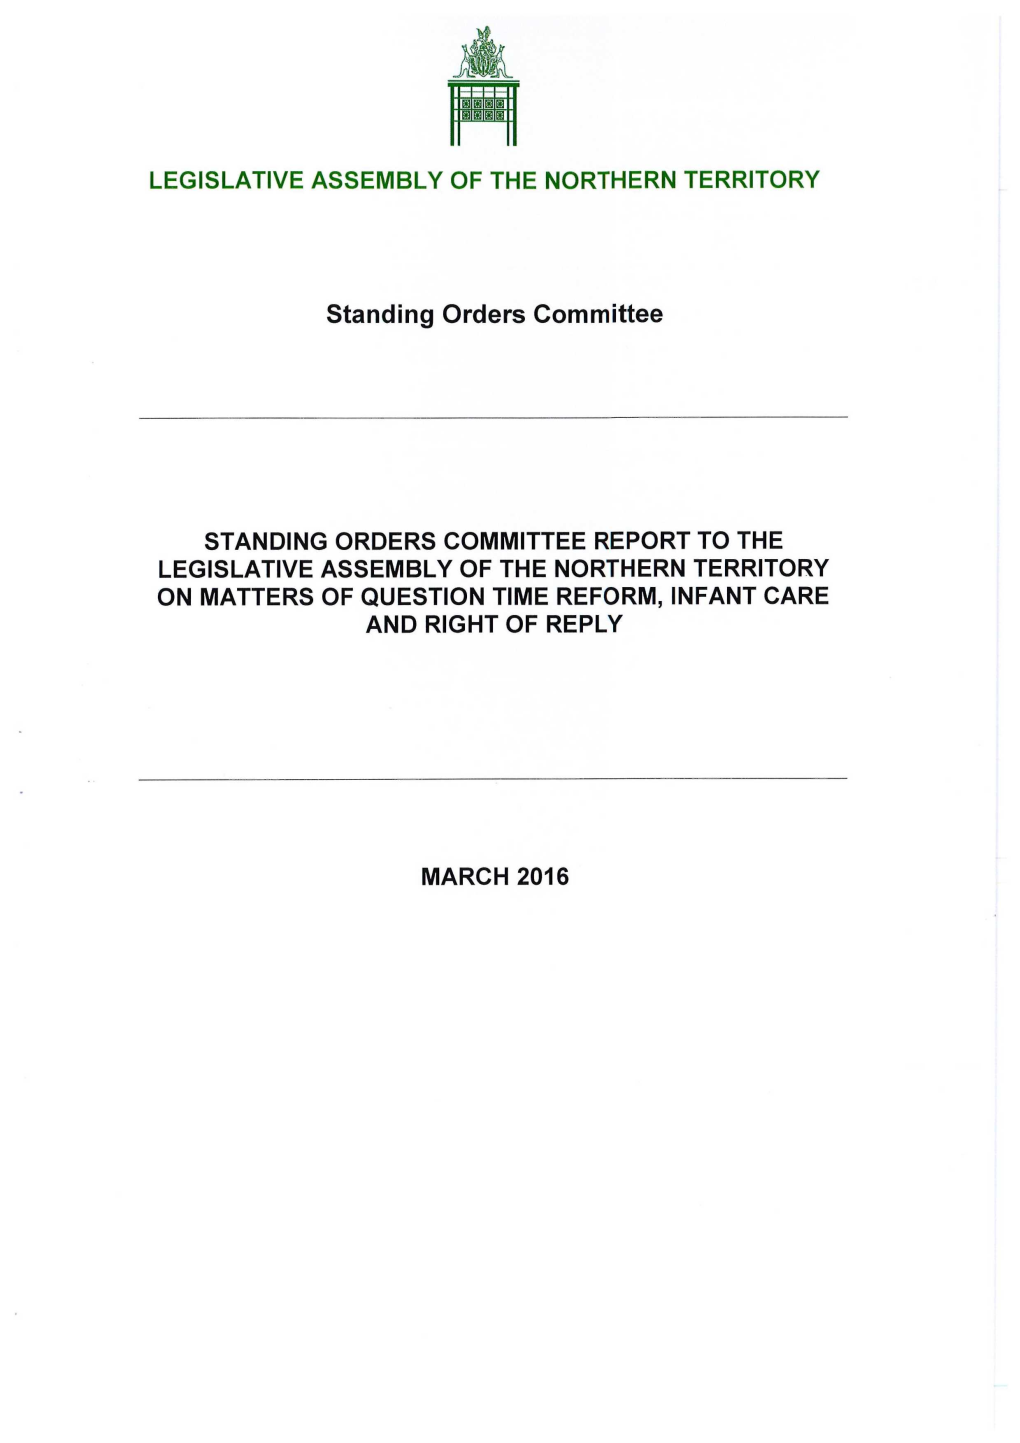 Standing Orders Committee Report On